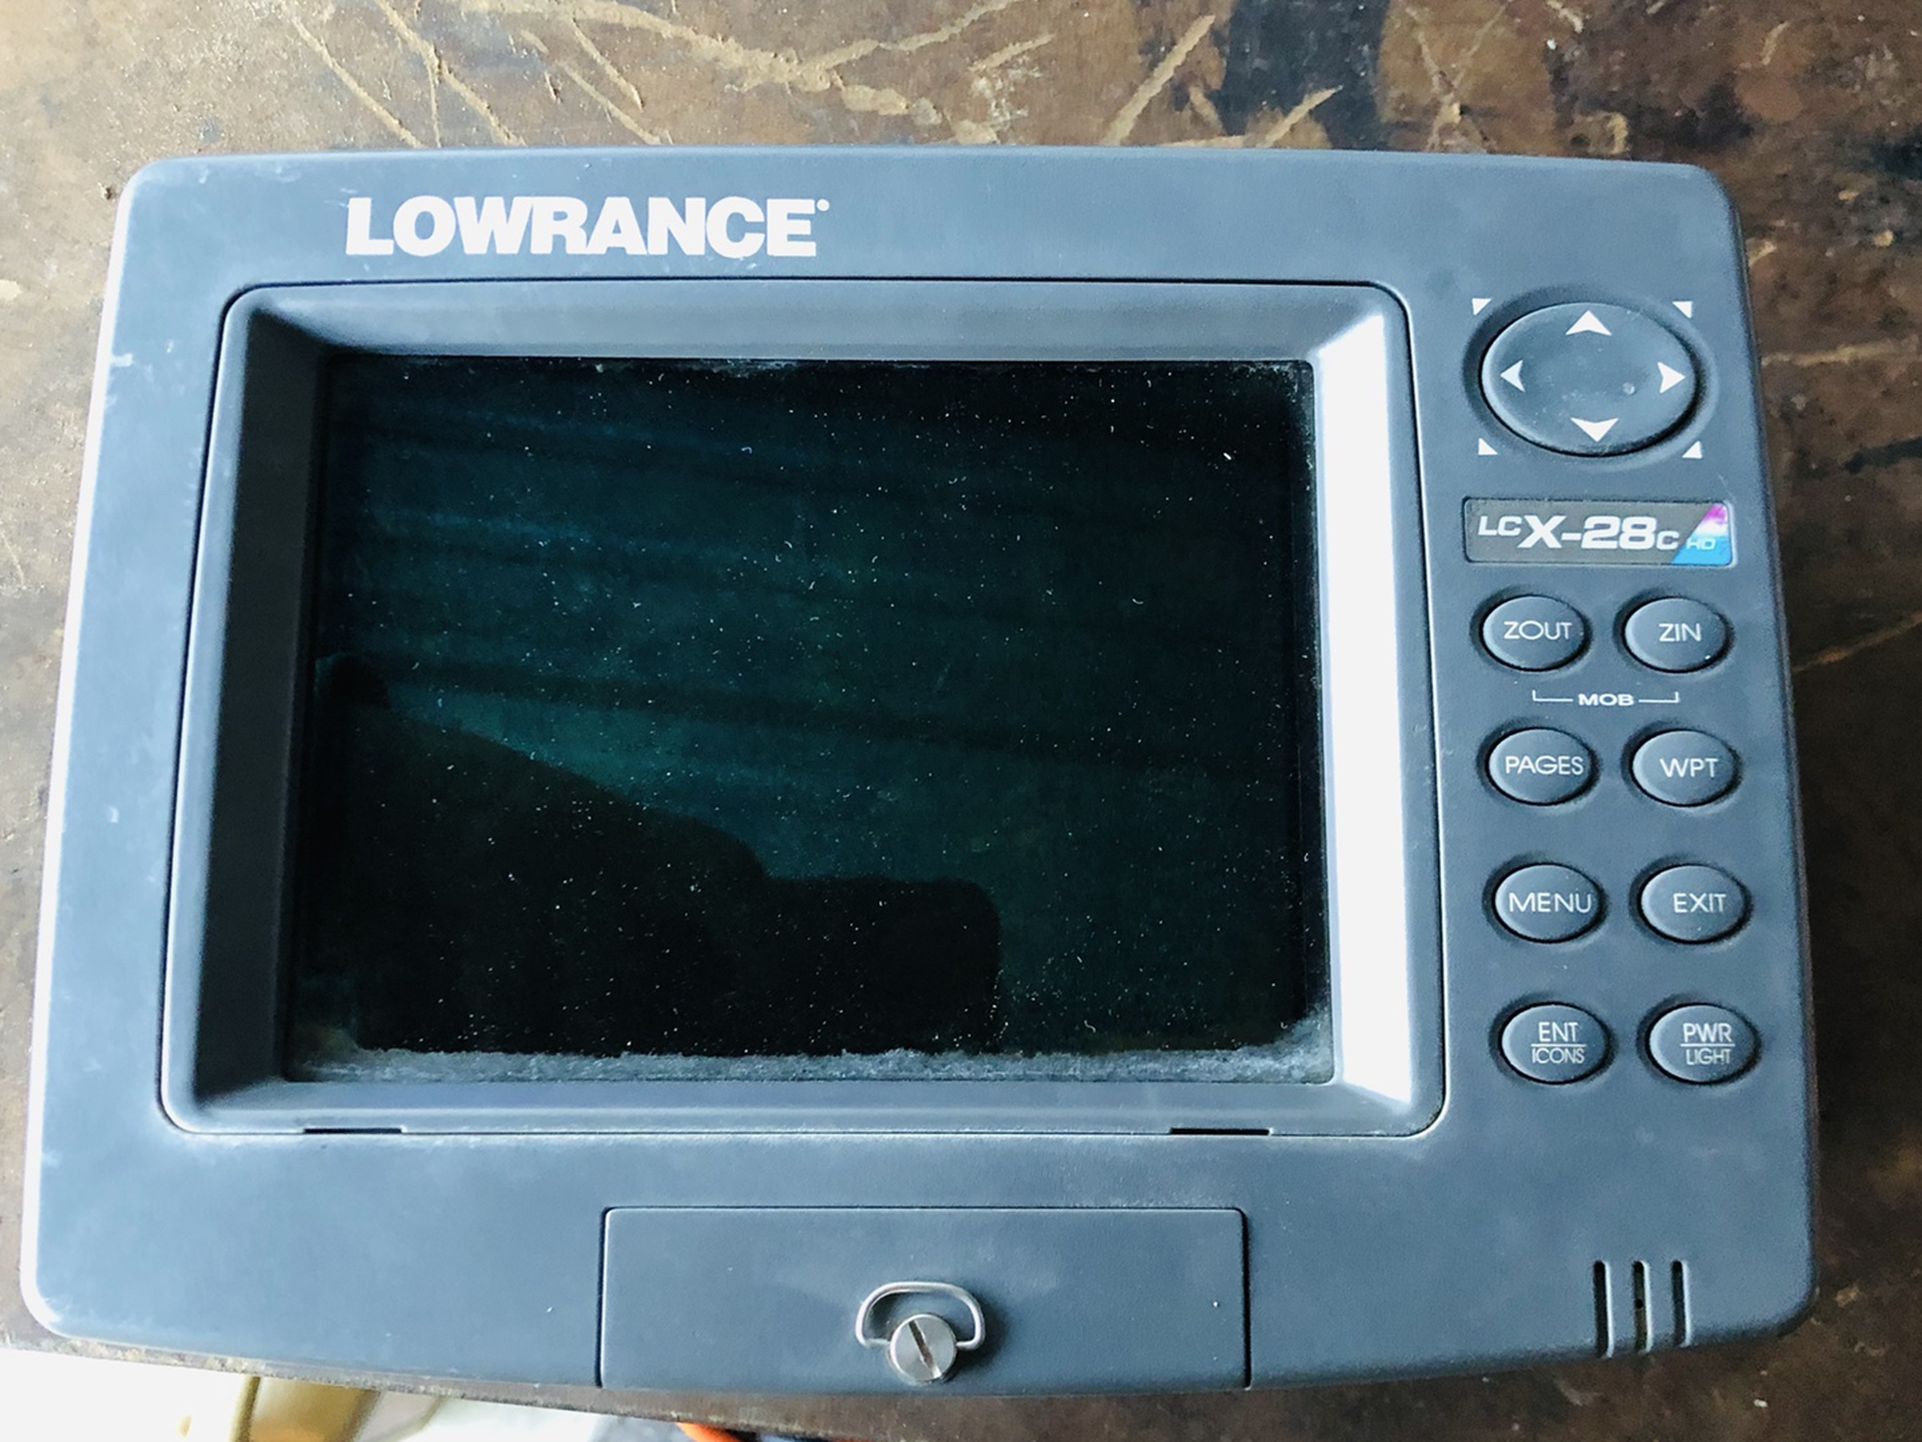 Lowrance LcX-28cHD